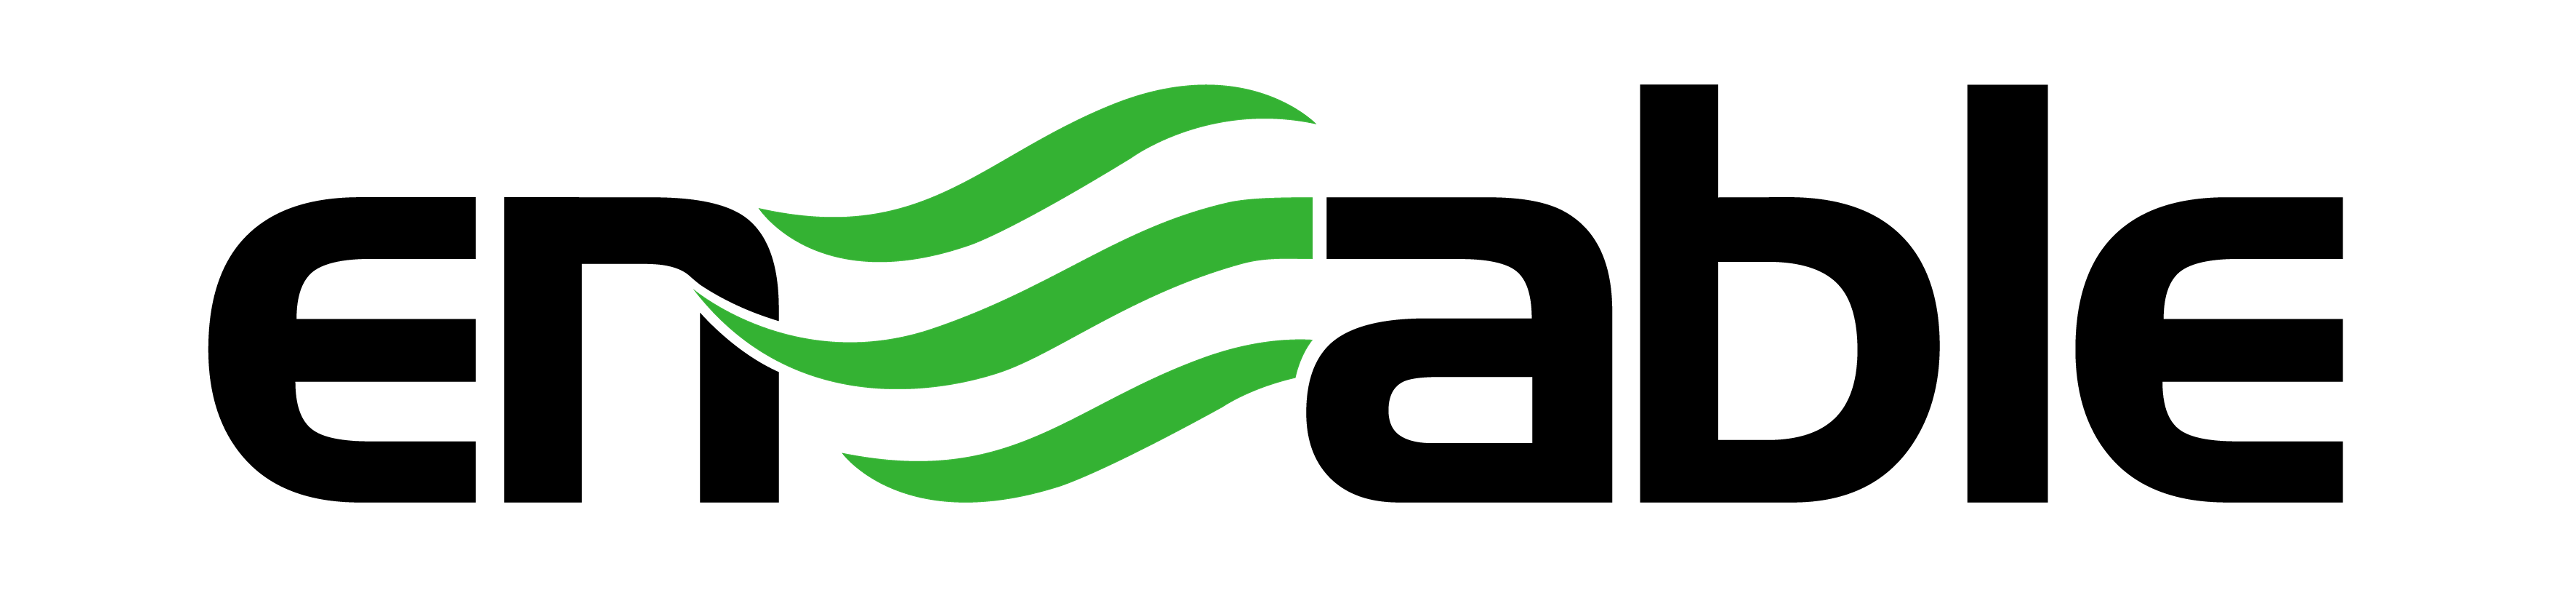 Enable Logo Primary black green RGB.png